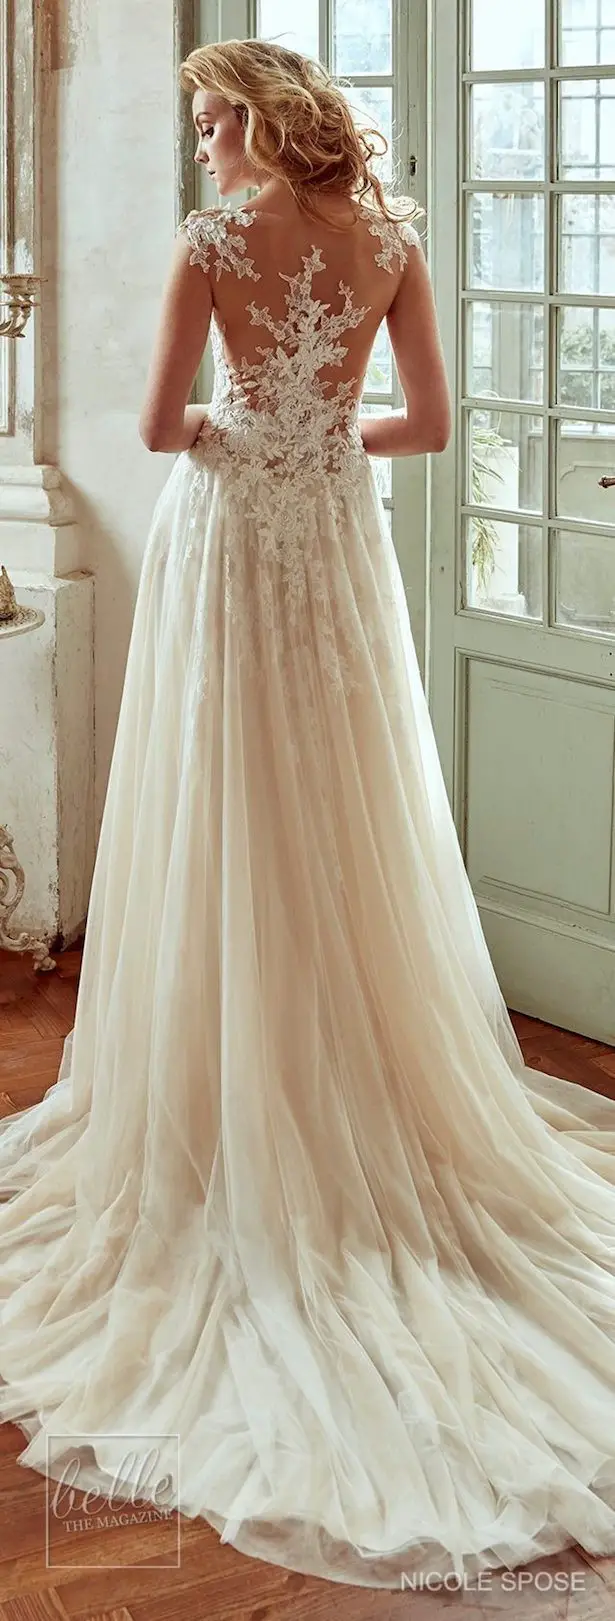 Nicole Spose Wedding Dress Collection 2017 